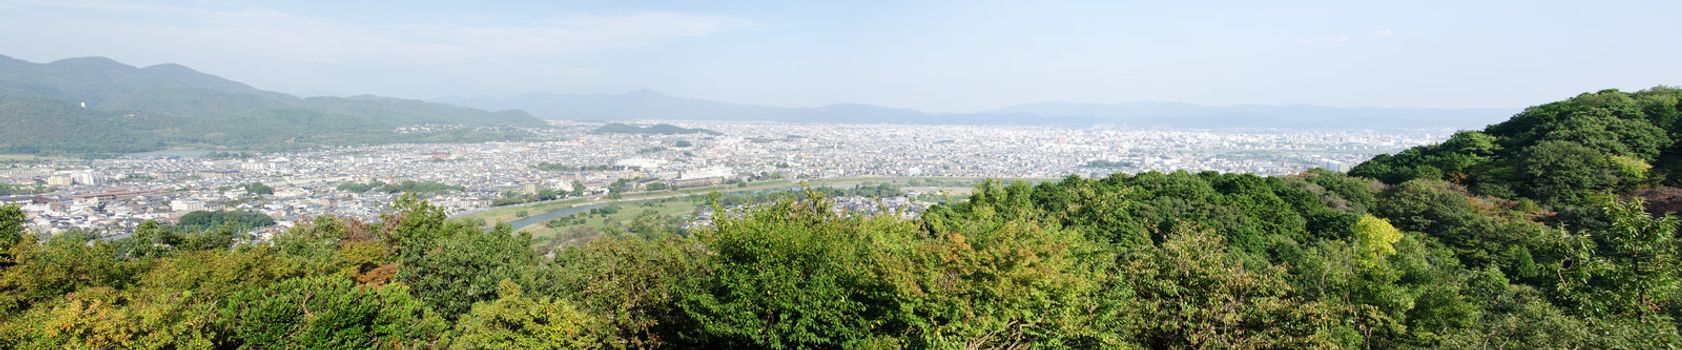 Panorama view of Arashiyama, Kyoto, Japan from a surrounding mountain